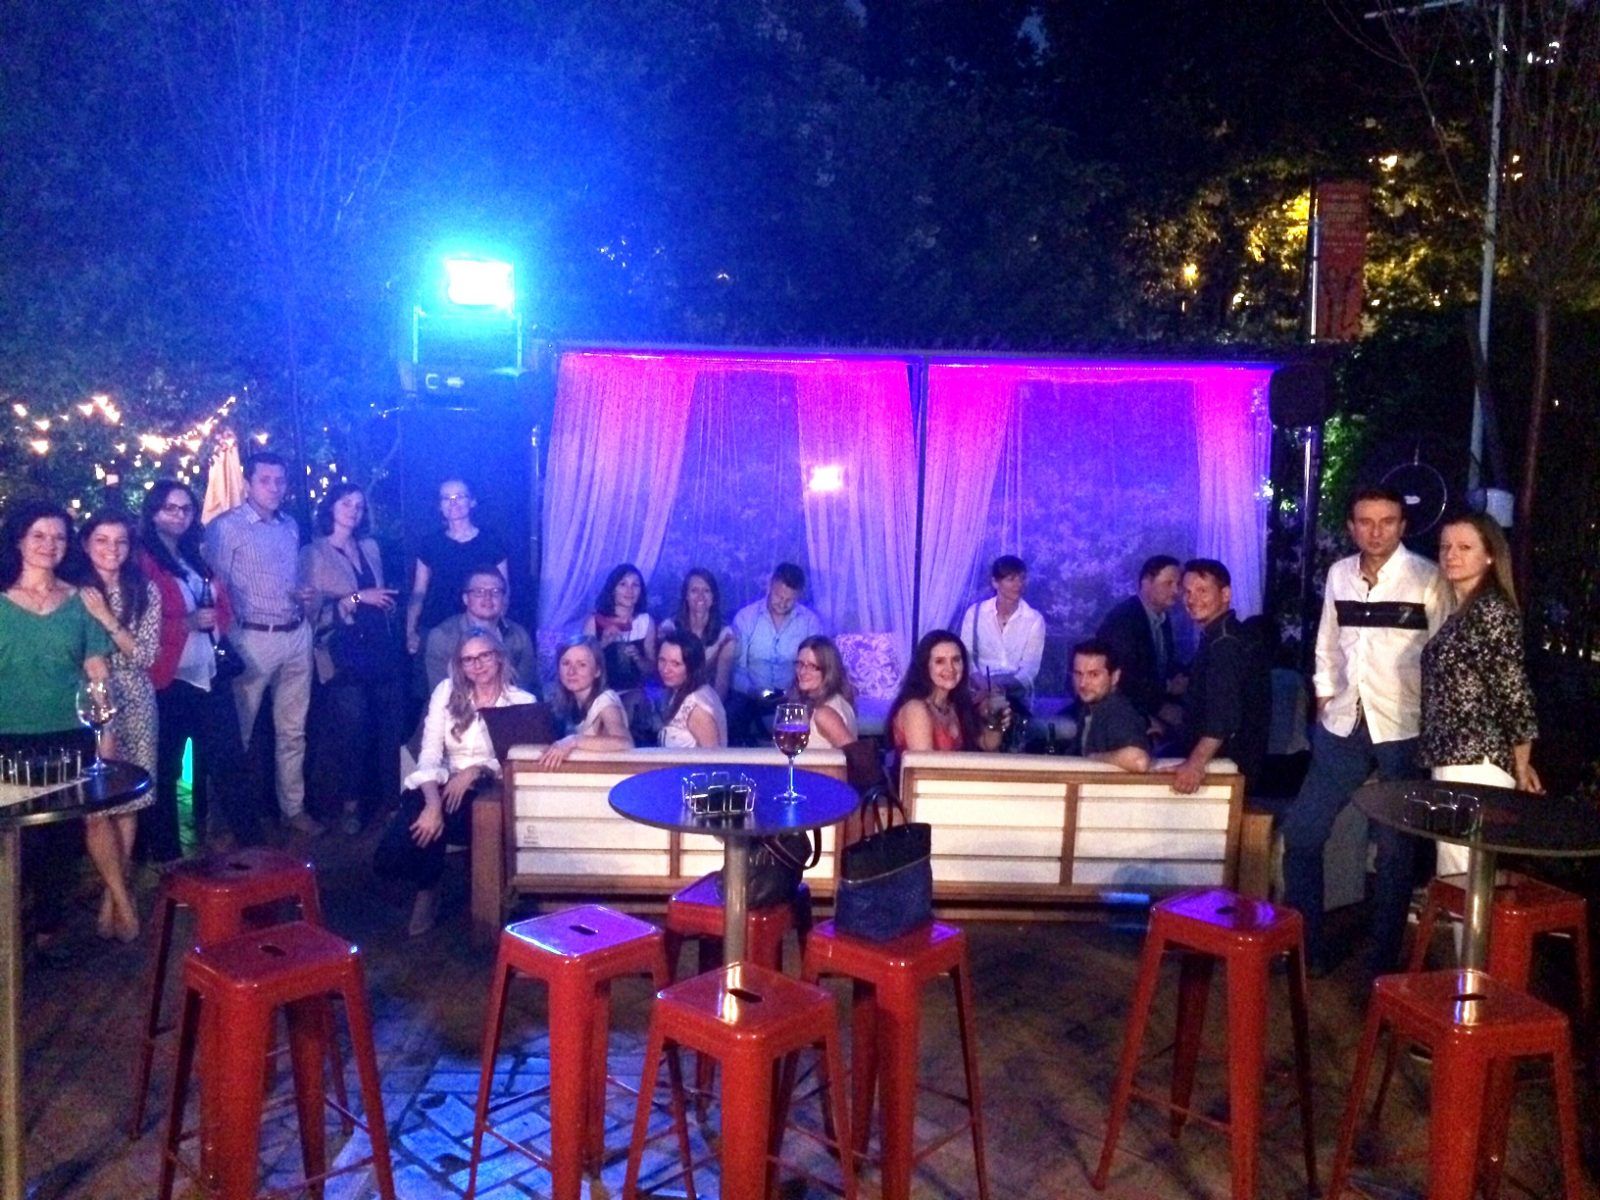 Networking event “PPM & Friends” at the restaurant Casa América.